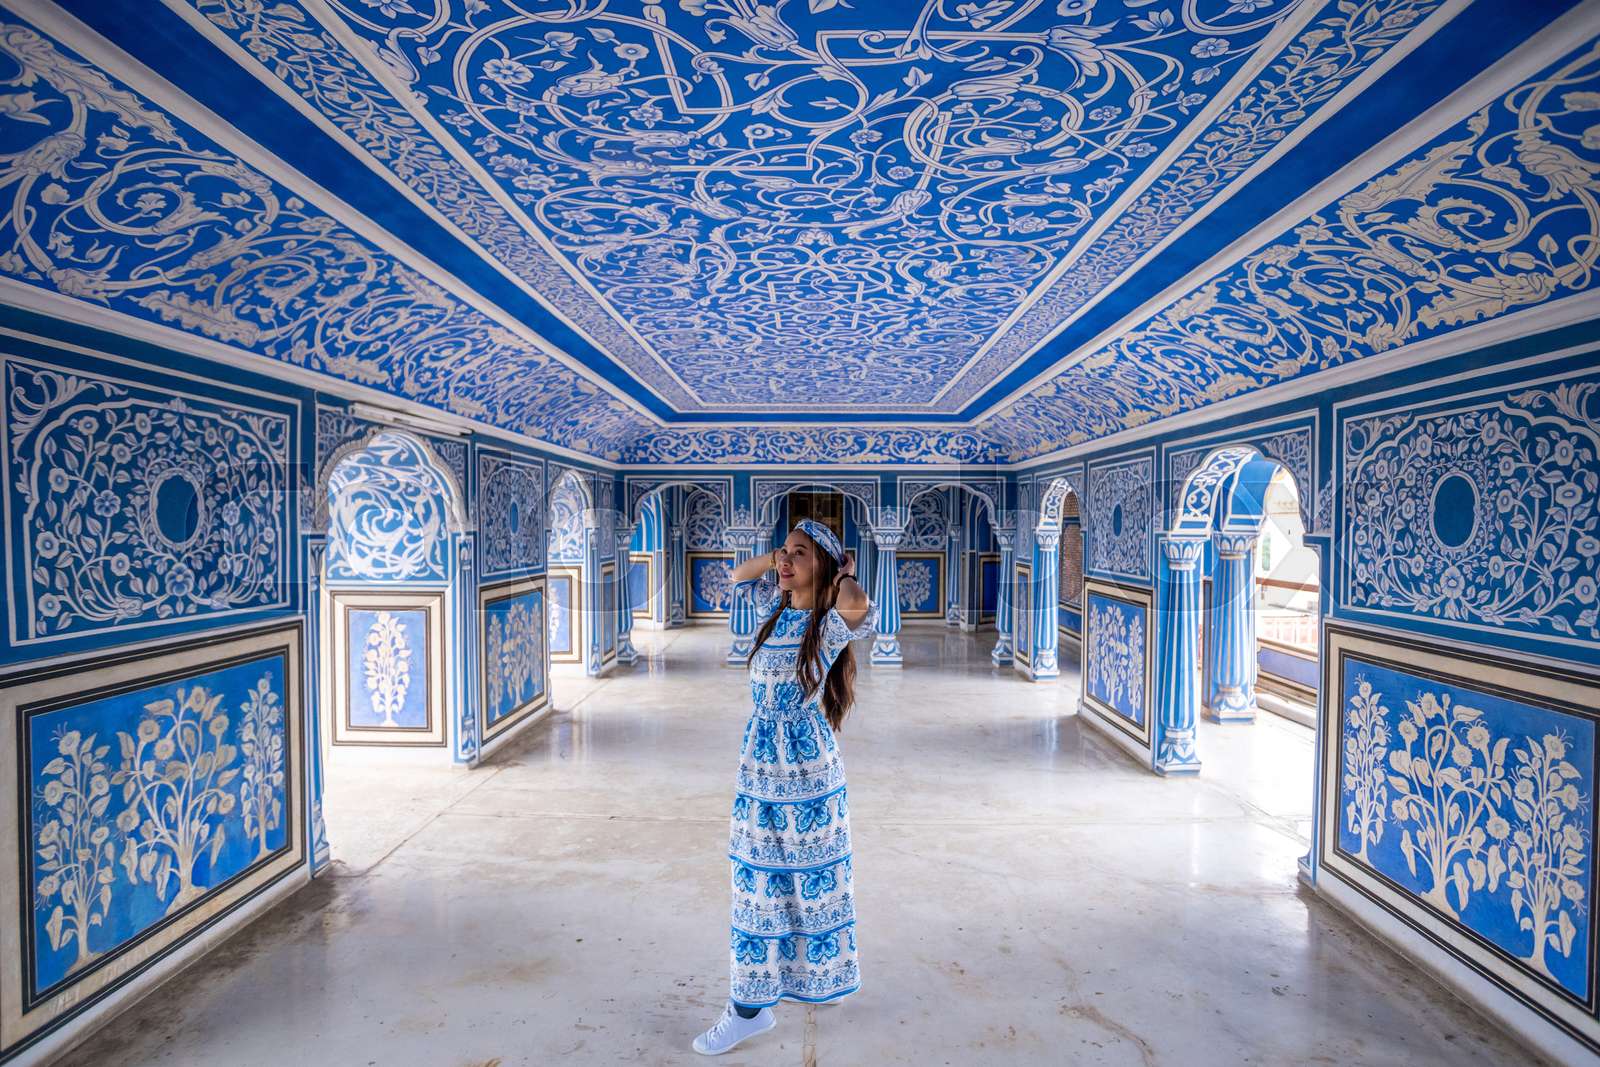 सिटी पैलेस जयपुर – City palace Jaipur in Hindi - Travelbeautifulindia